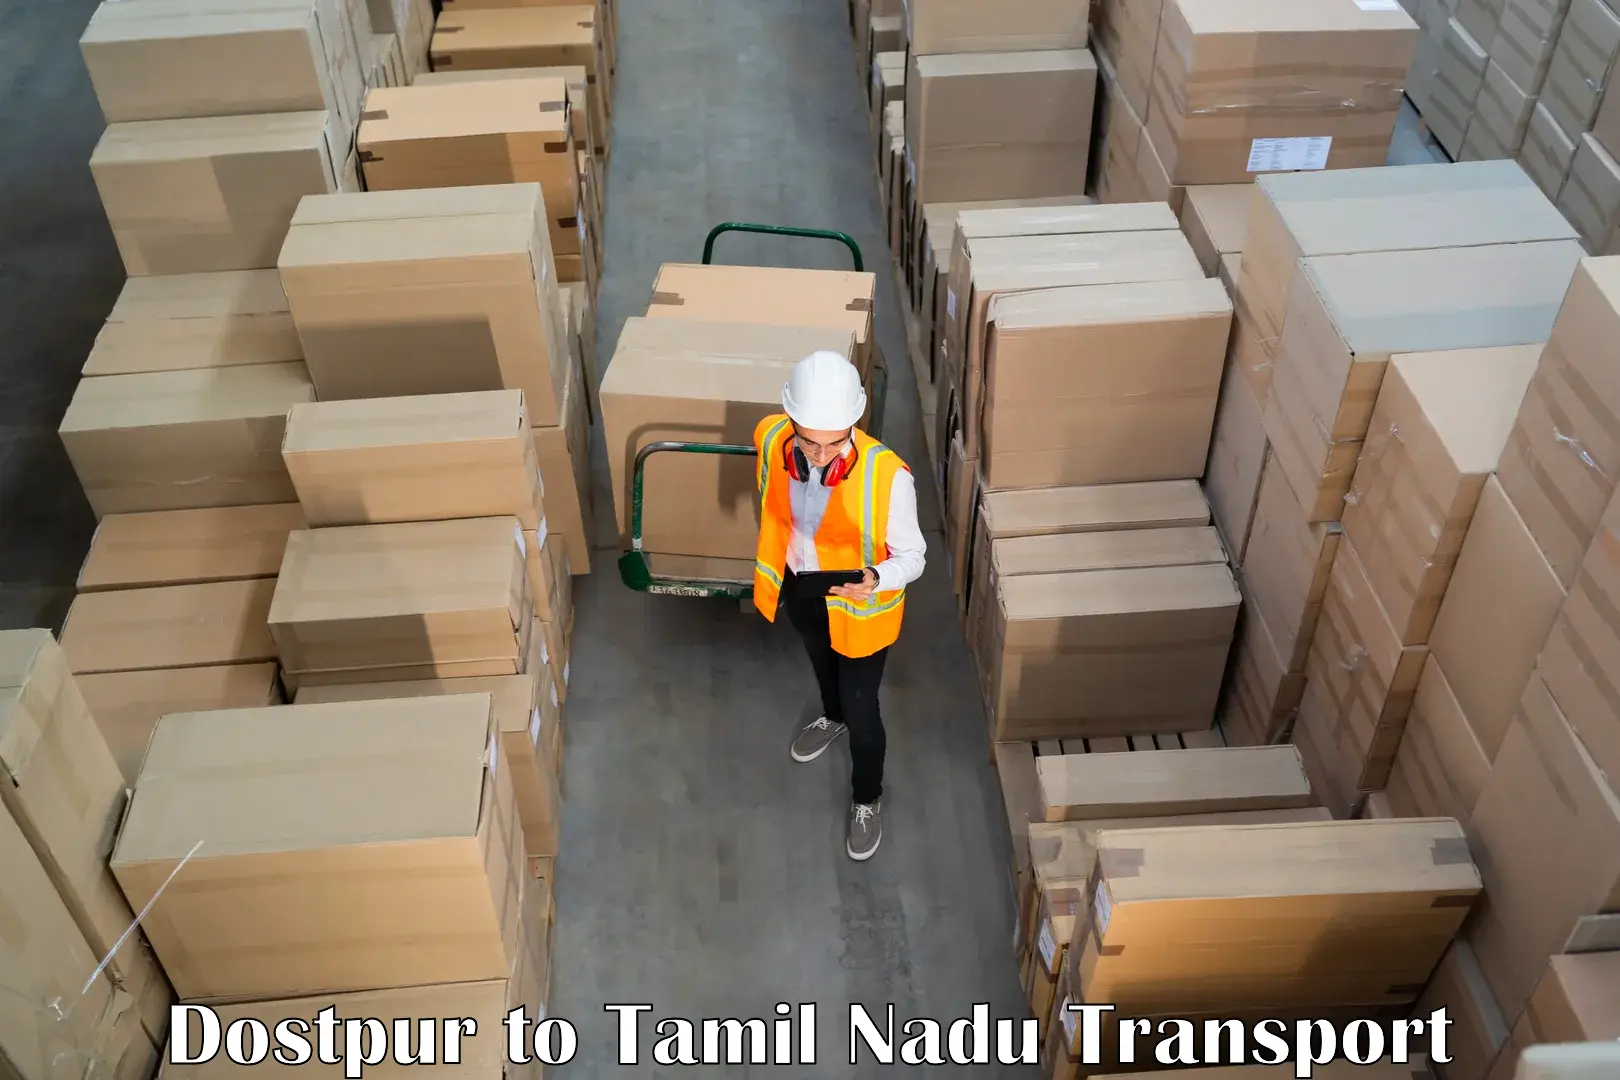 Furniture transport service Dostpur to Ennore Port Chennai